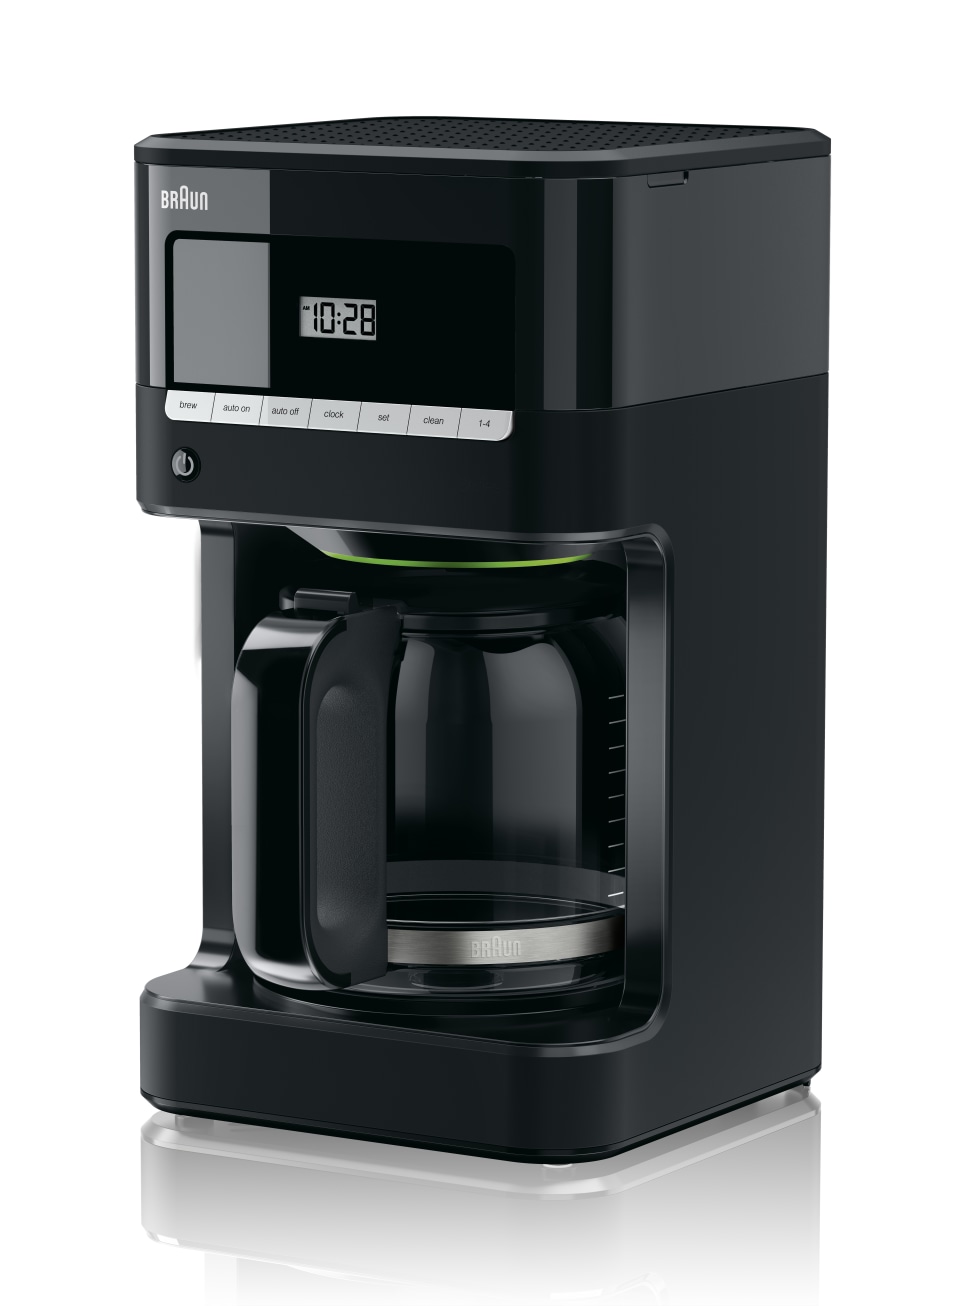 Braun, BrewSense 12-Cup Drip Coffee Maker - Zola